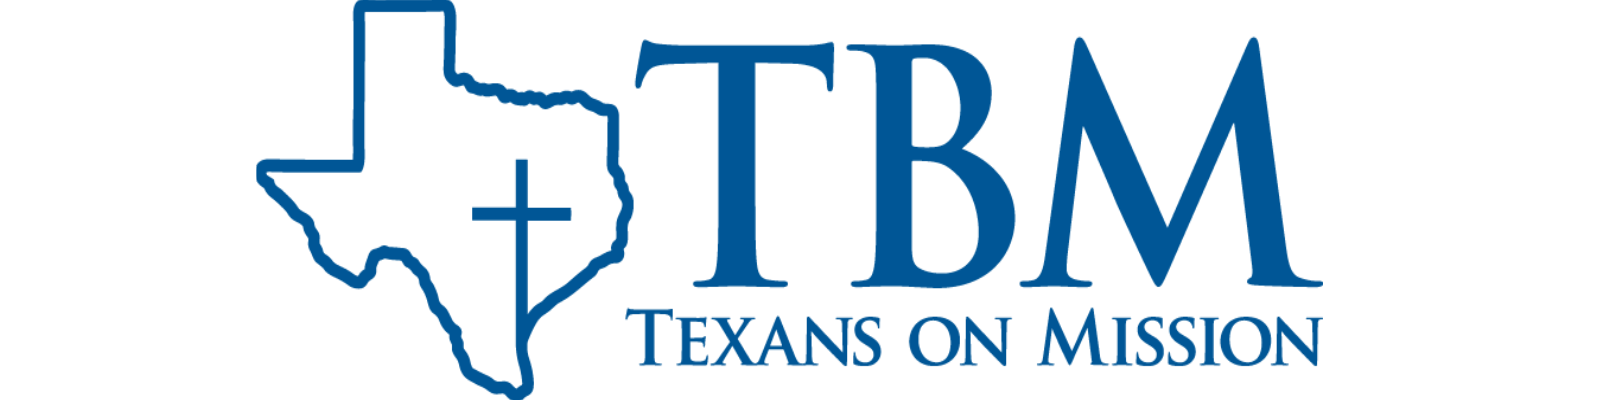 TexasBaptistMen-logo-FeaturedSize.png